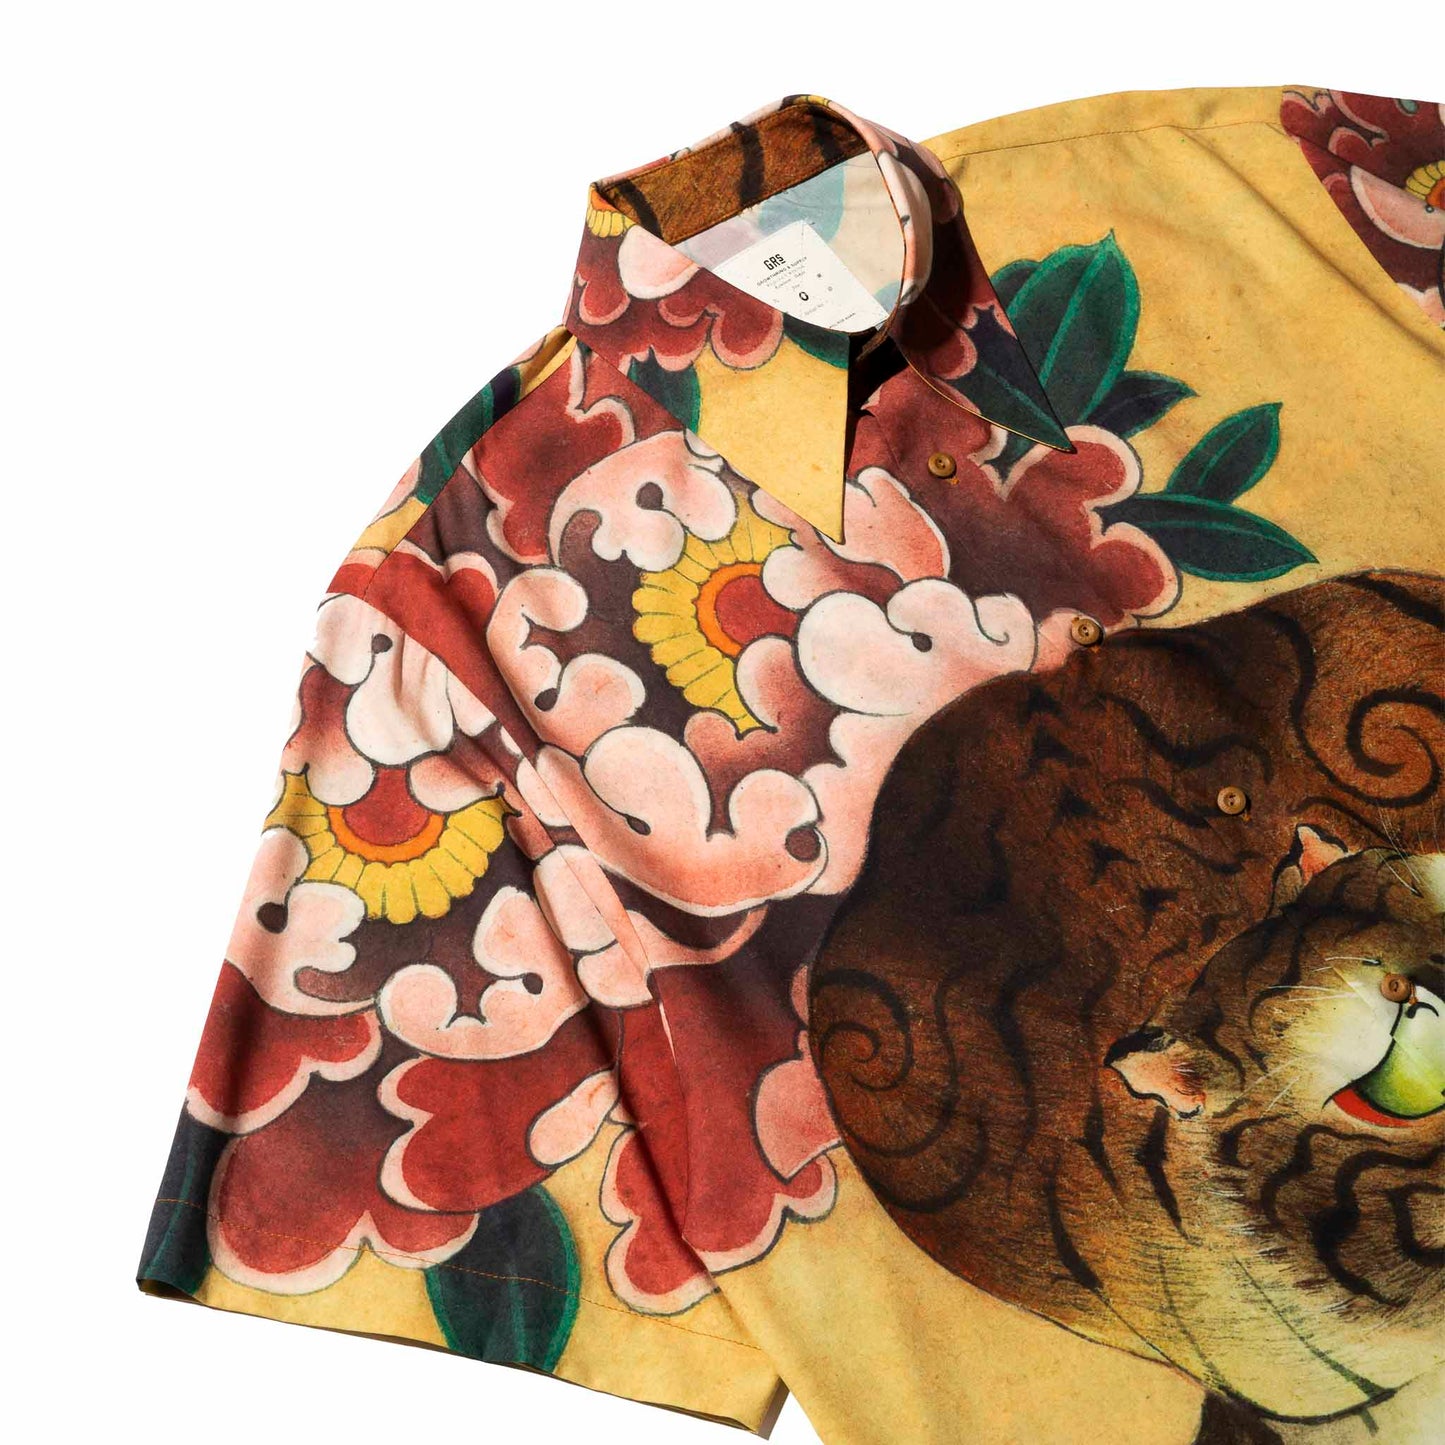 CNY Tiger Overprint Shirt